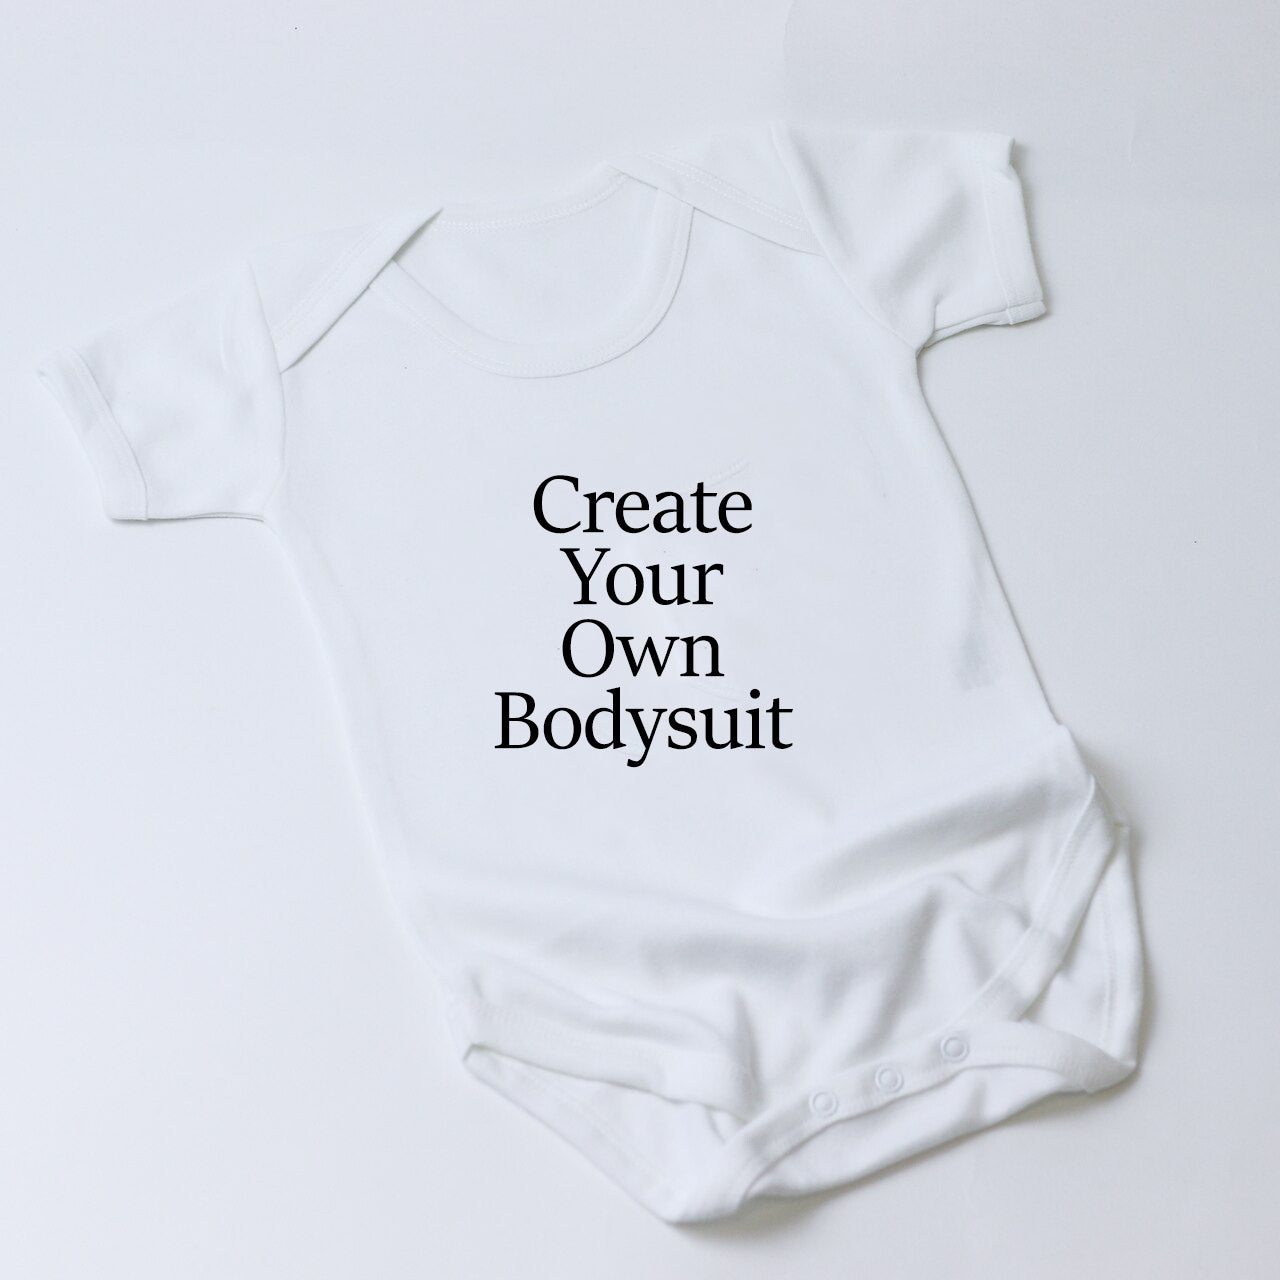 Create Your Own Bodysuit